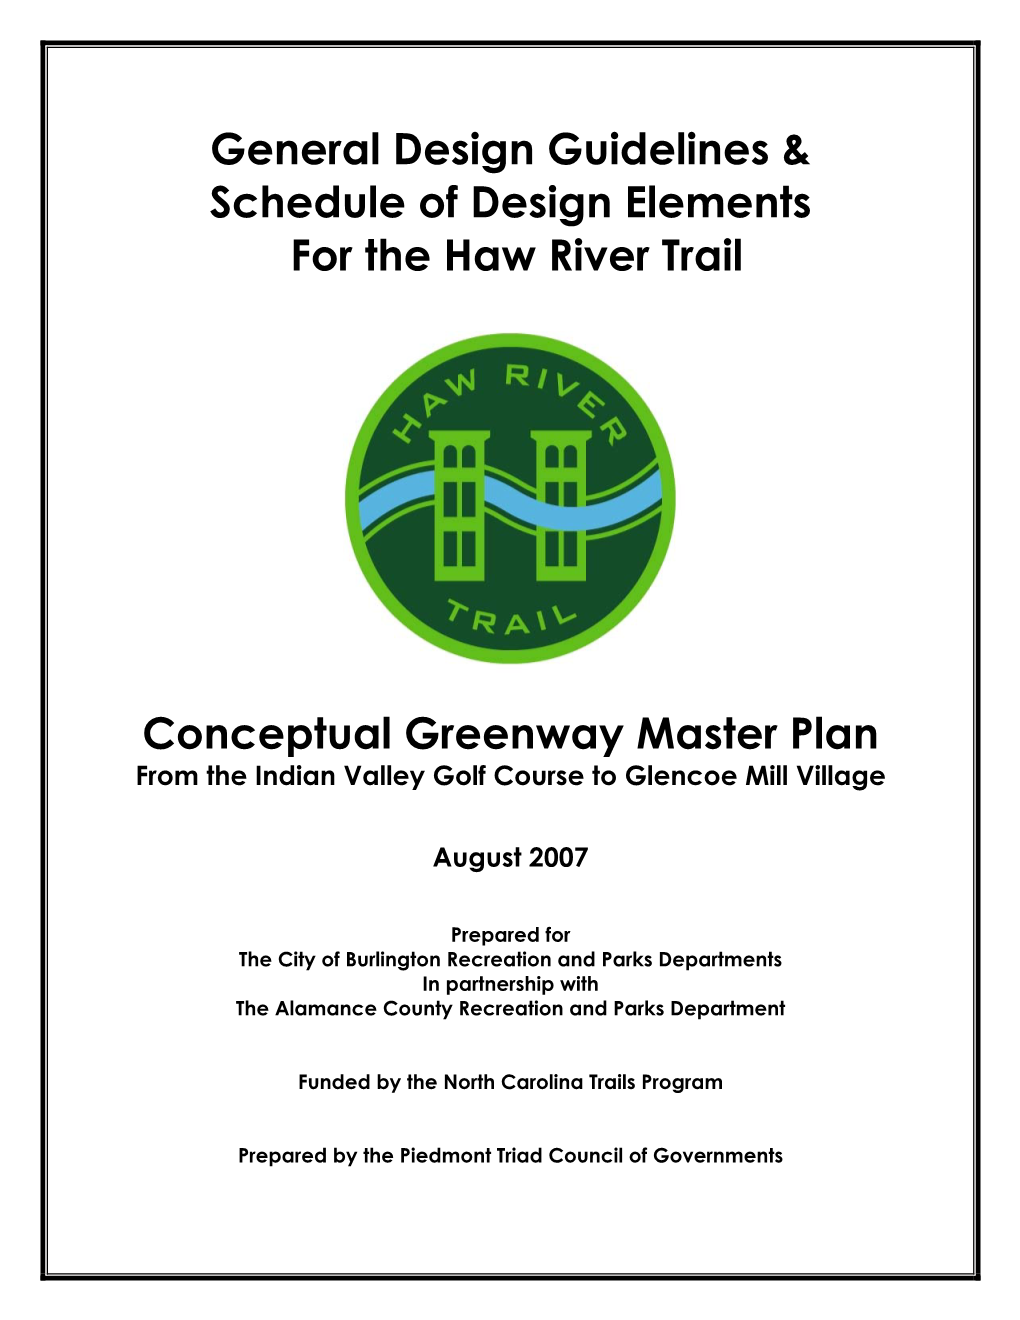 General Design Guidelines & Schedule of Design Elements For